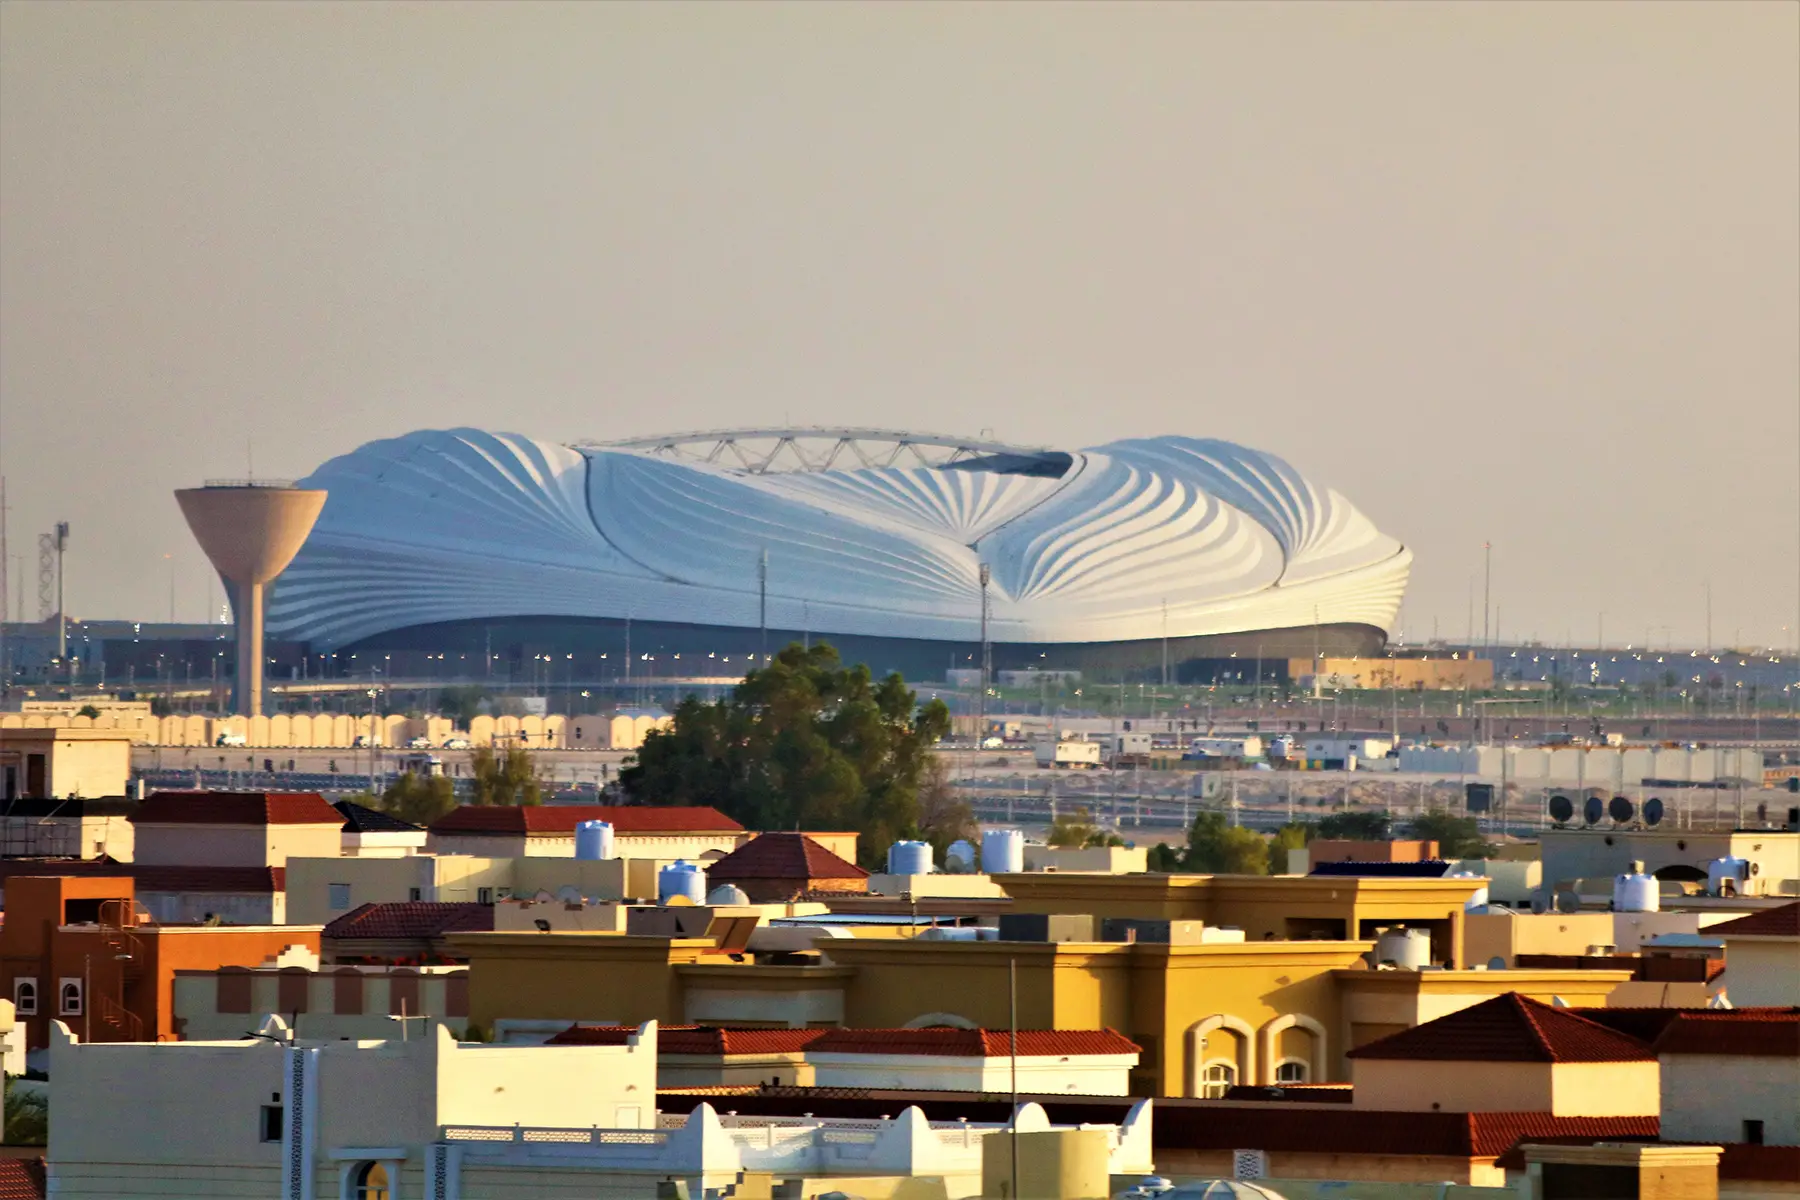 Al Janoub stadium